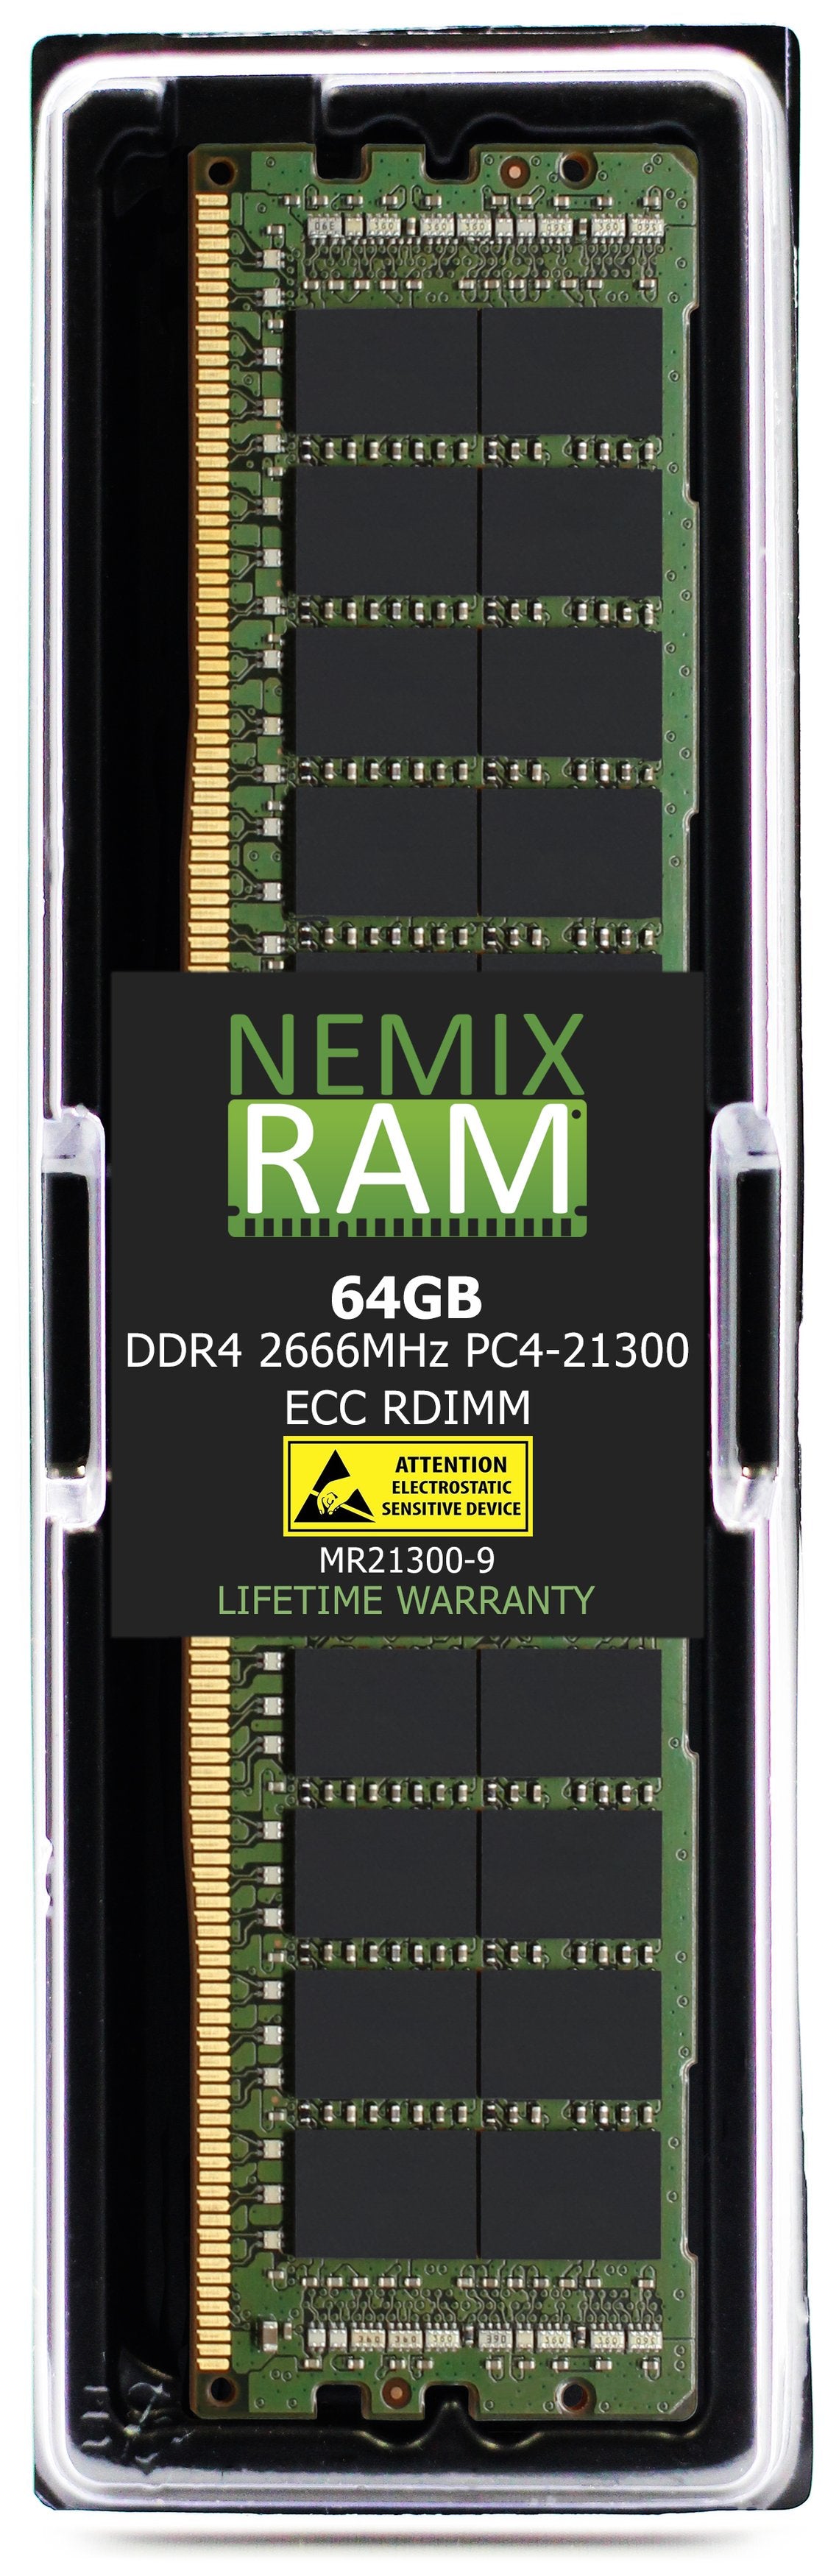 Hynix HMAA8GR7A2R4N-VN 64GB DDR4 2666MHZ PC4-21300 RDIMM Compatible Memory Module